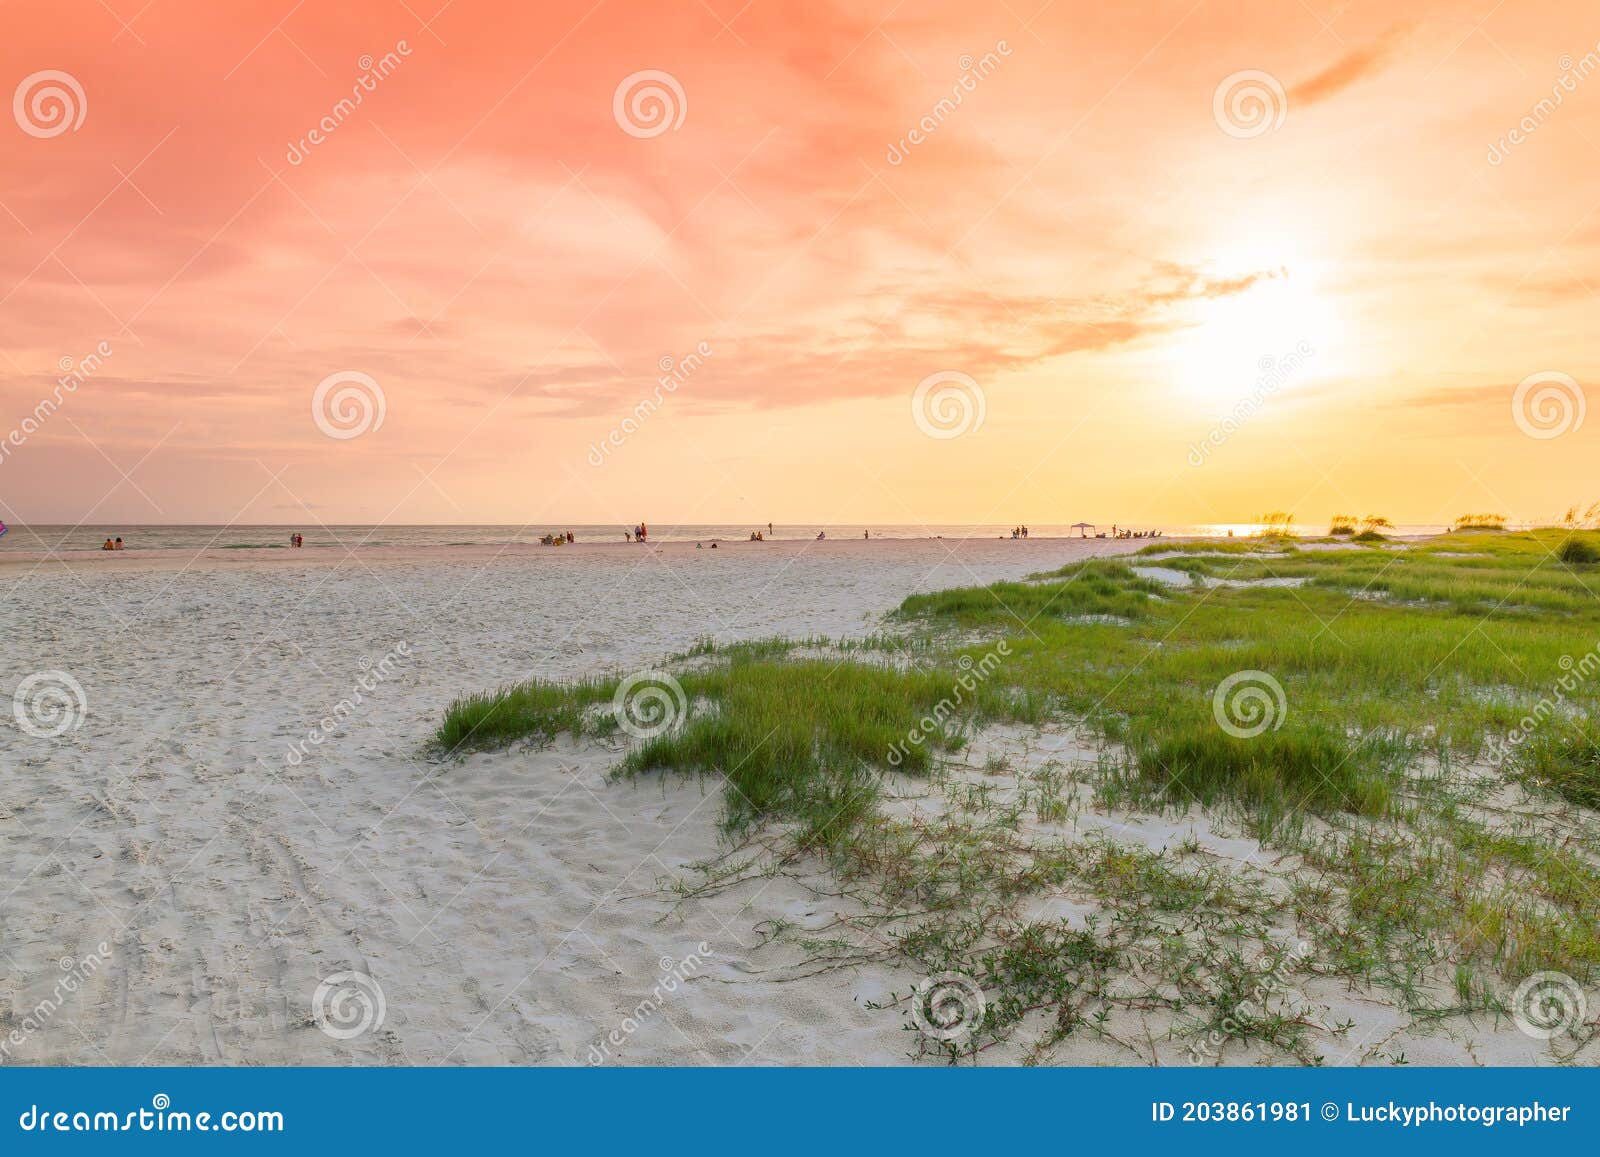 siesta key beach at sunset in florida